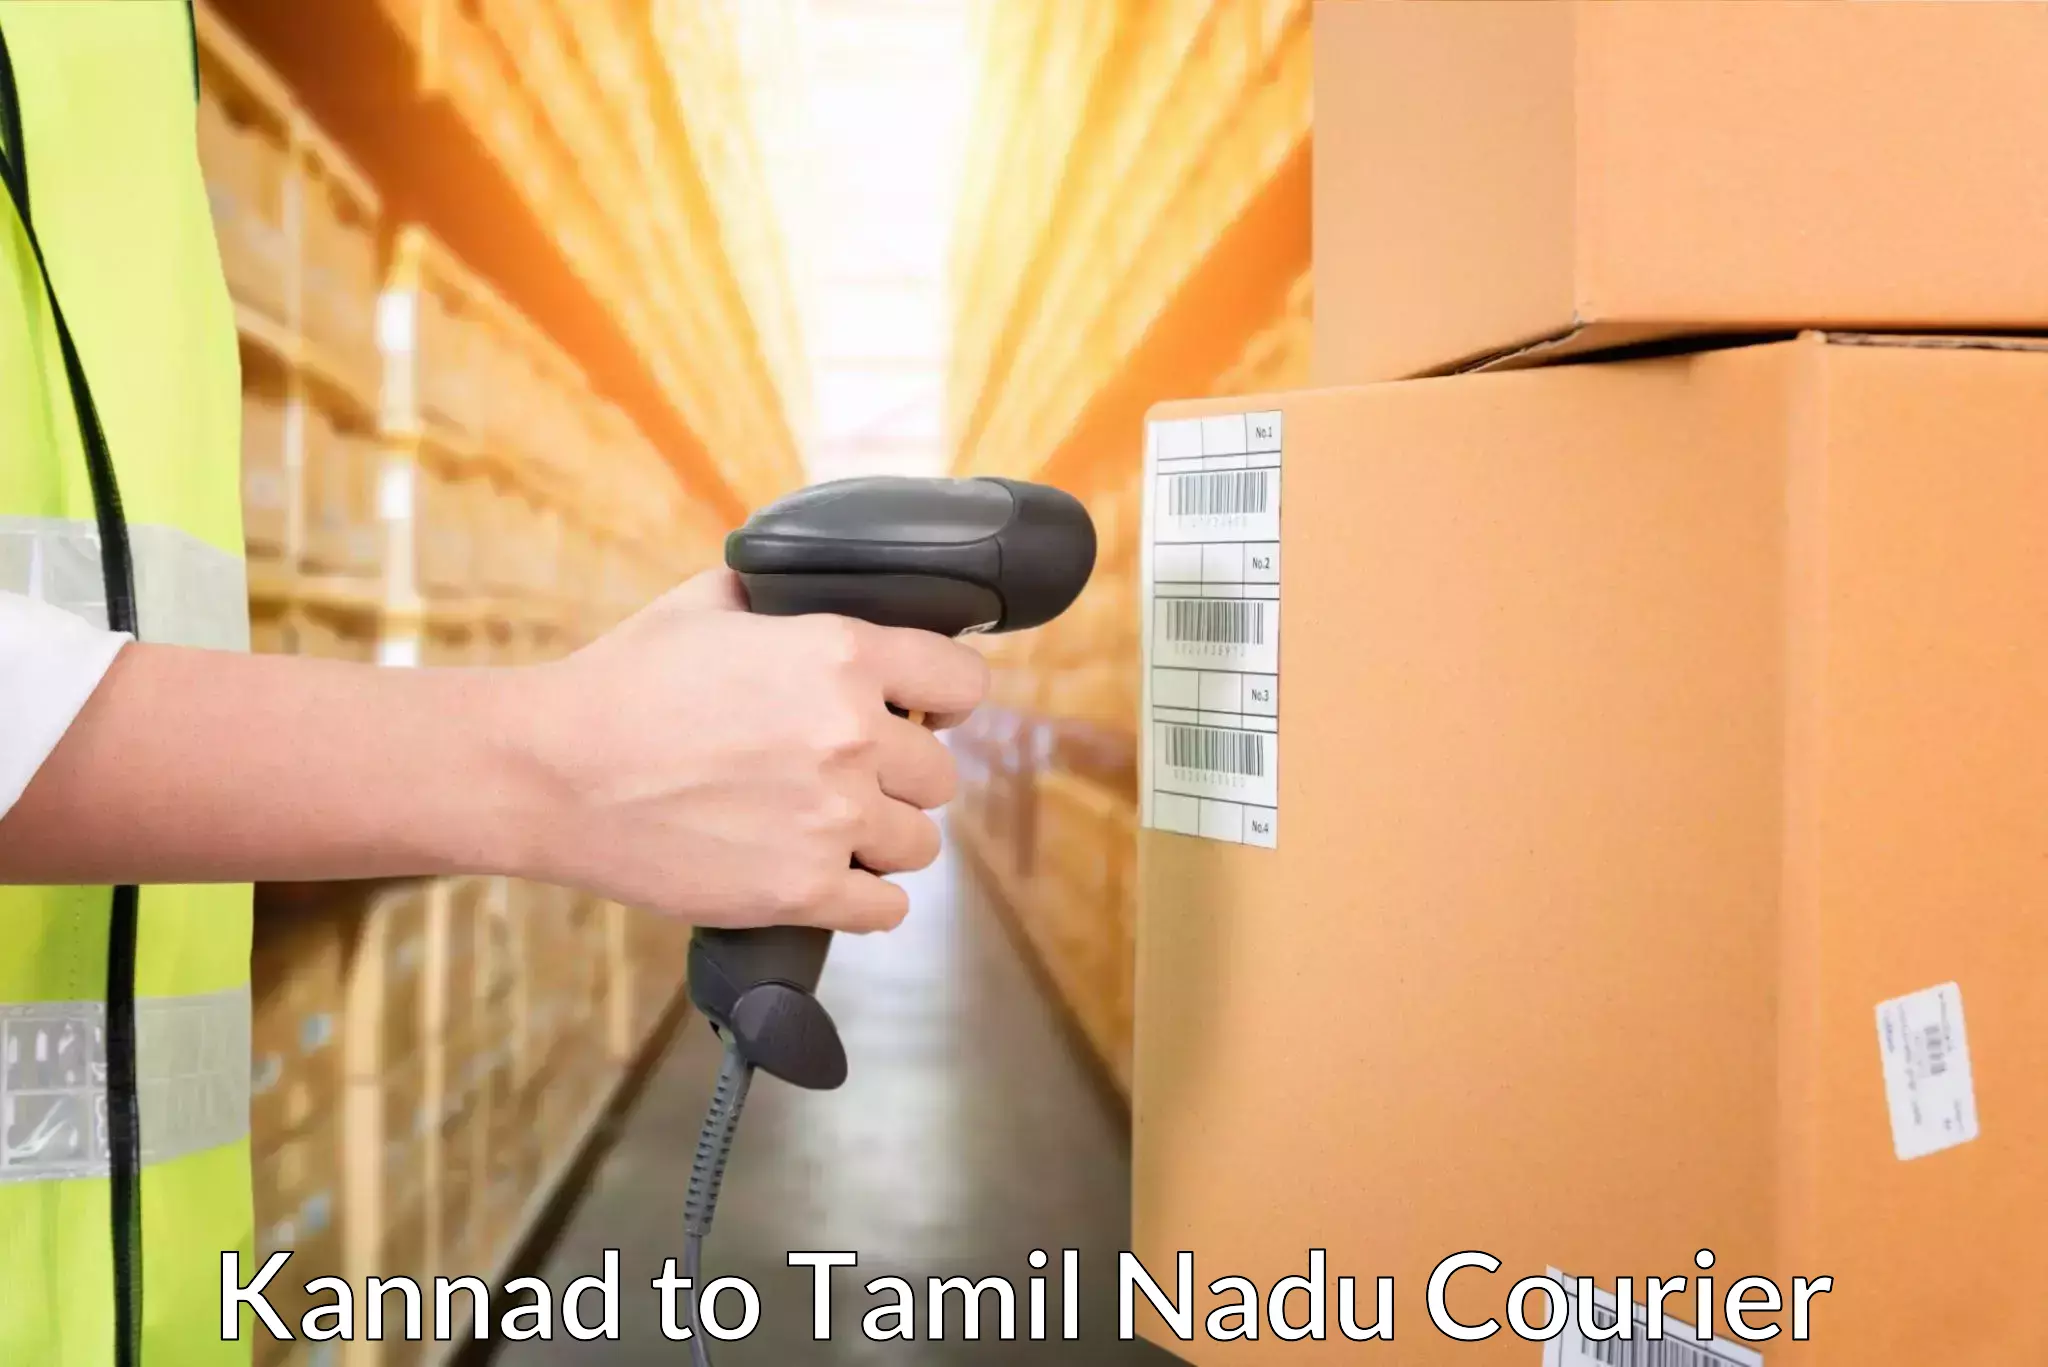 Global logistics network Kannad to Nilakottai